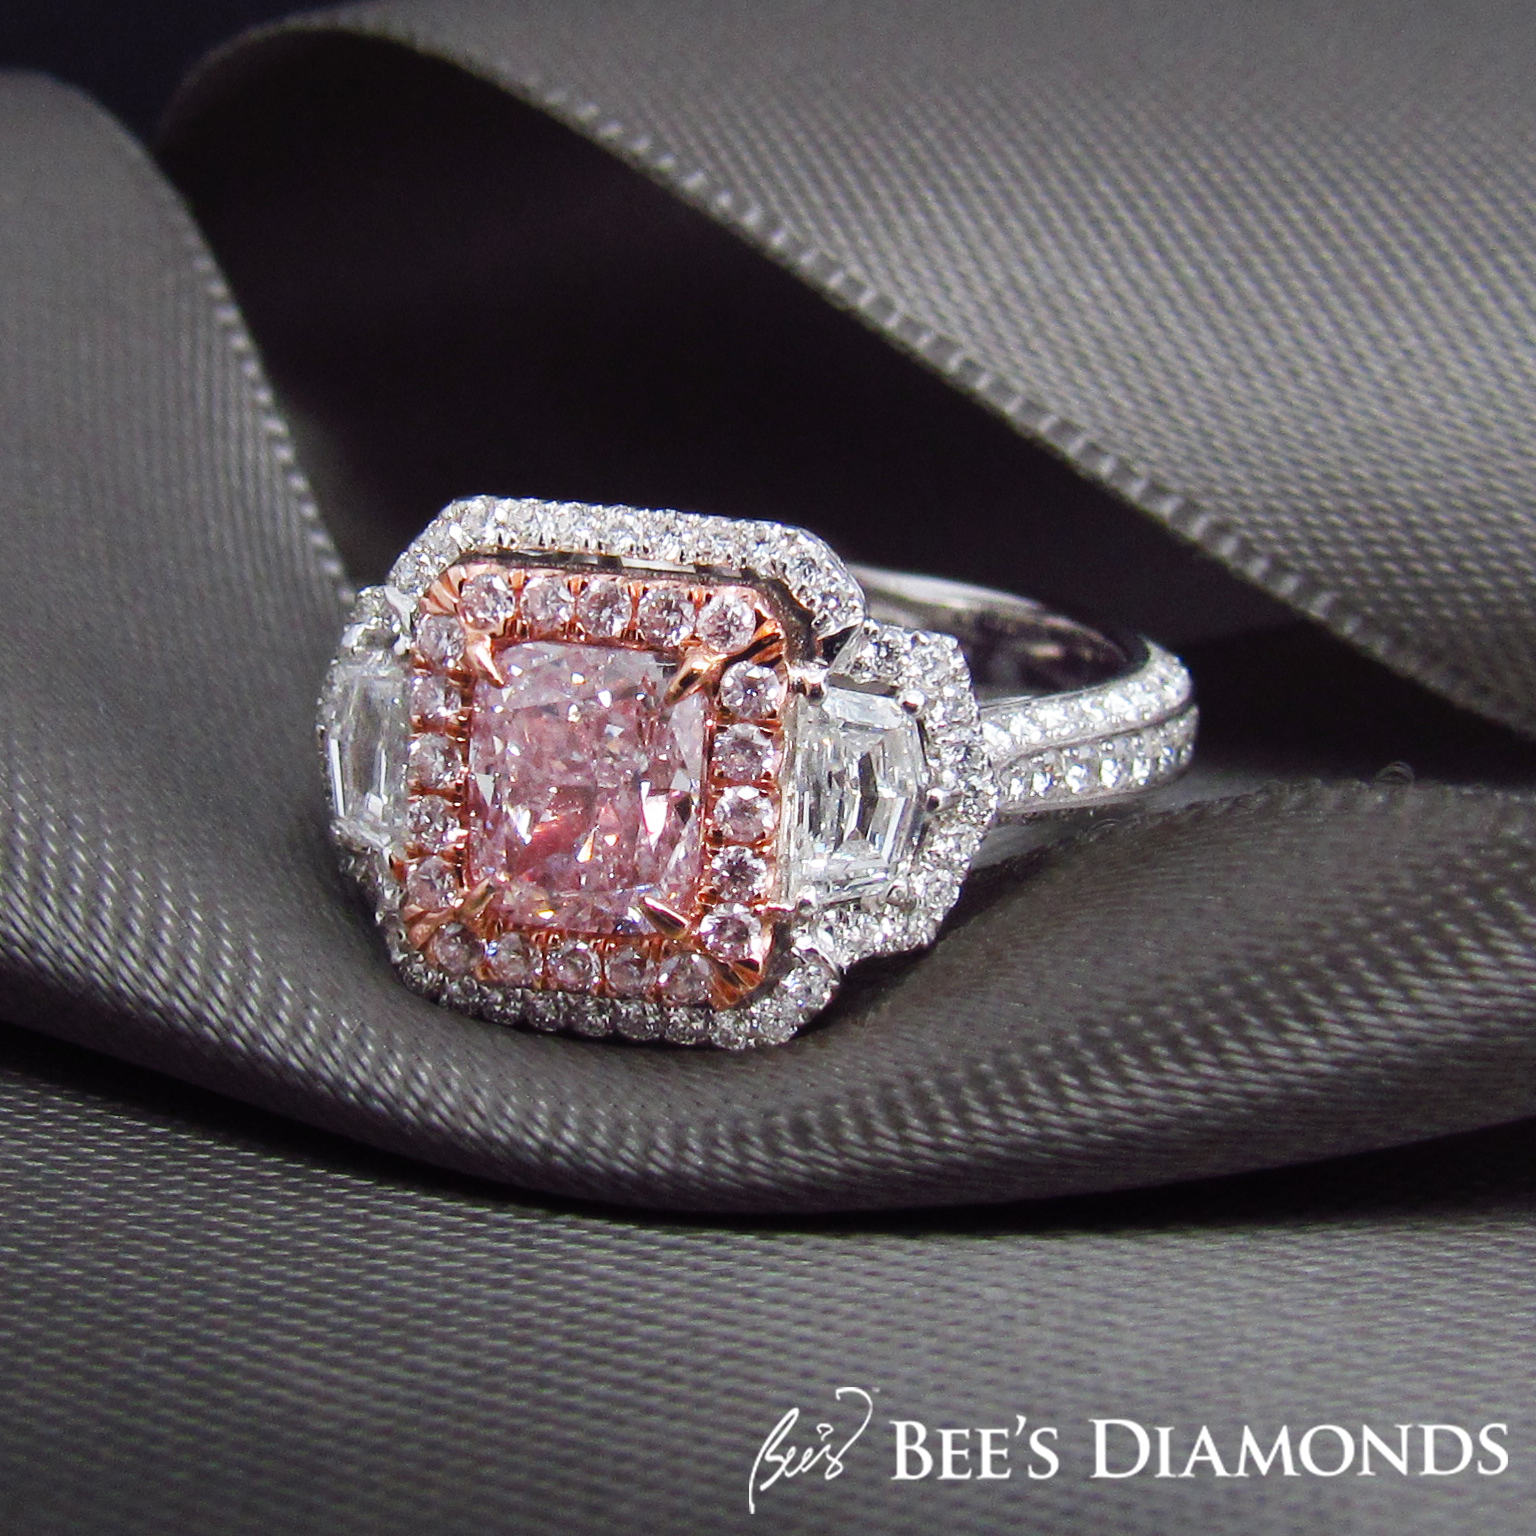 Fancy intense pink diamond engagement ring | Bee's Diamonds